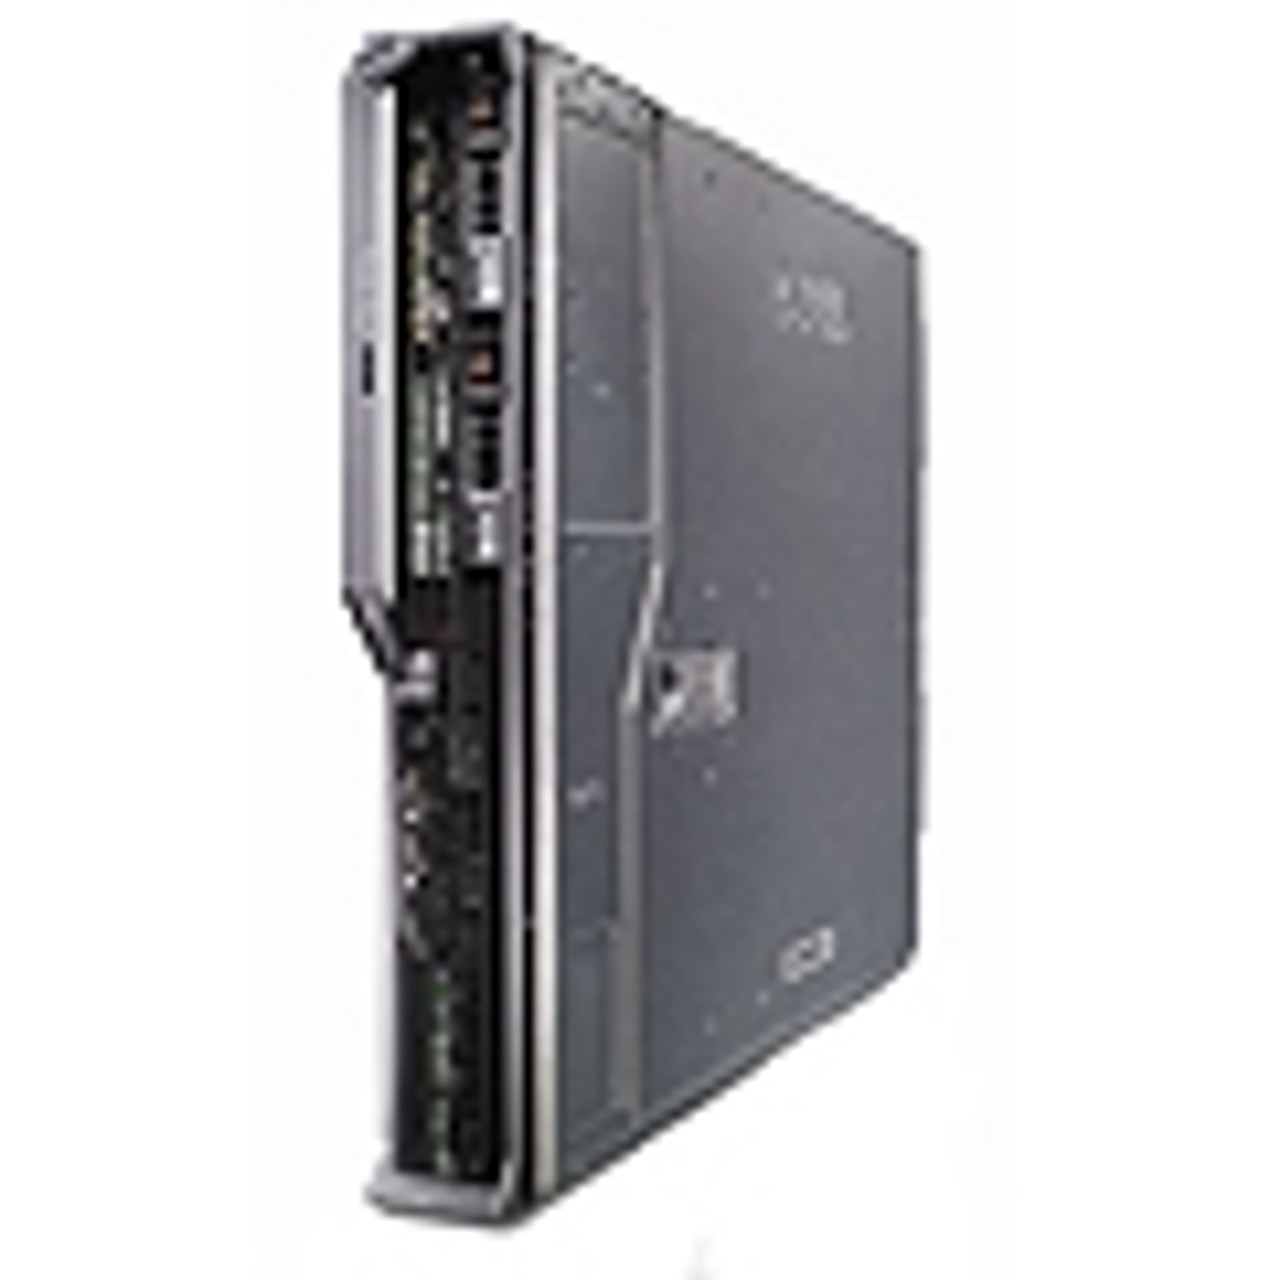 Dell PowerEdge M910 Blade Servers